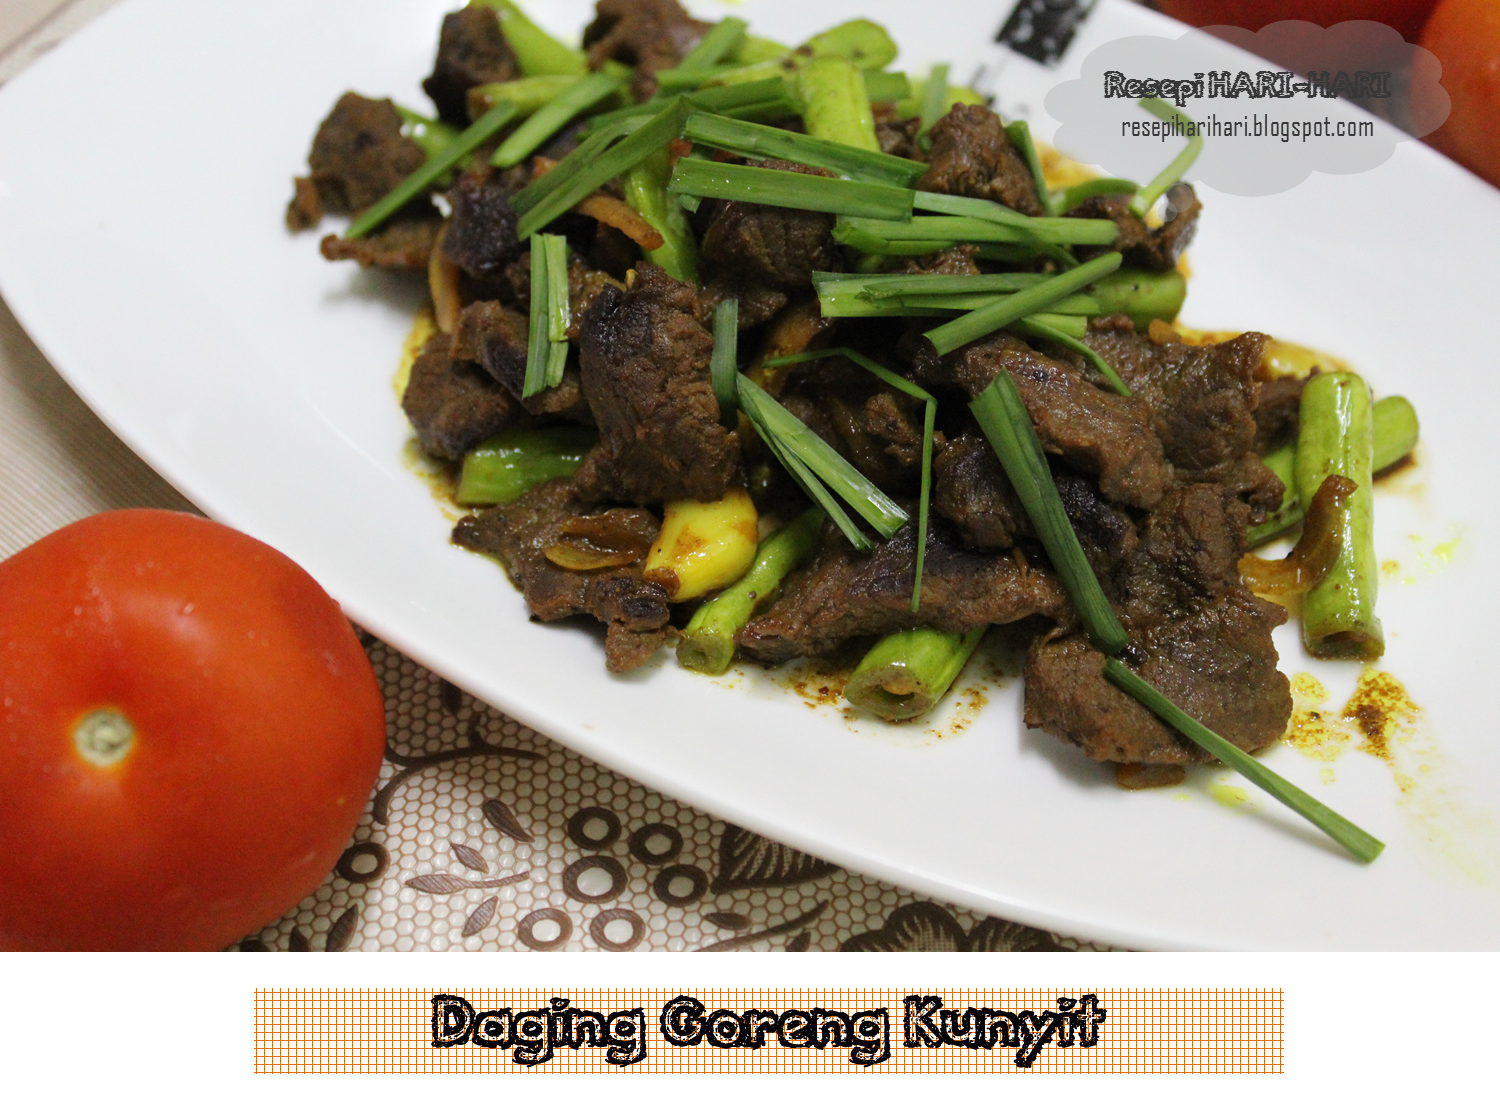 Recipes of Daily Cooking and Baking : Daging Goreng Kunyit